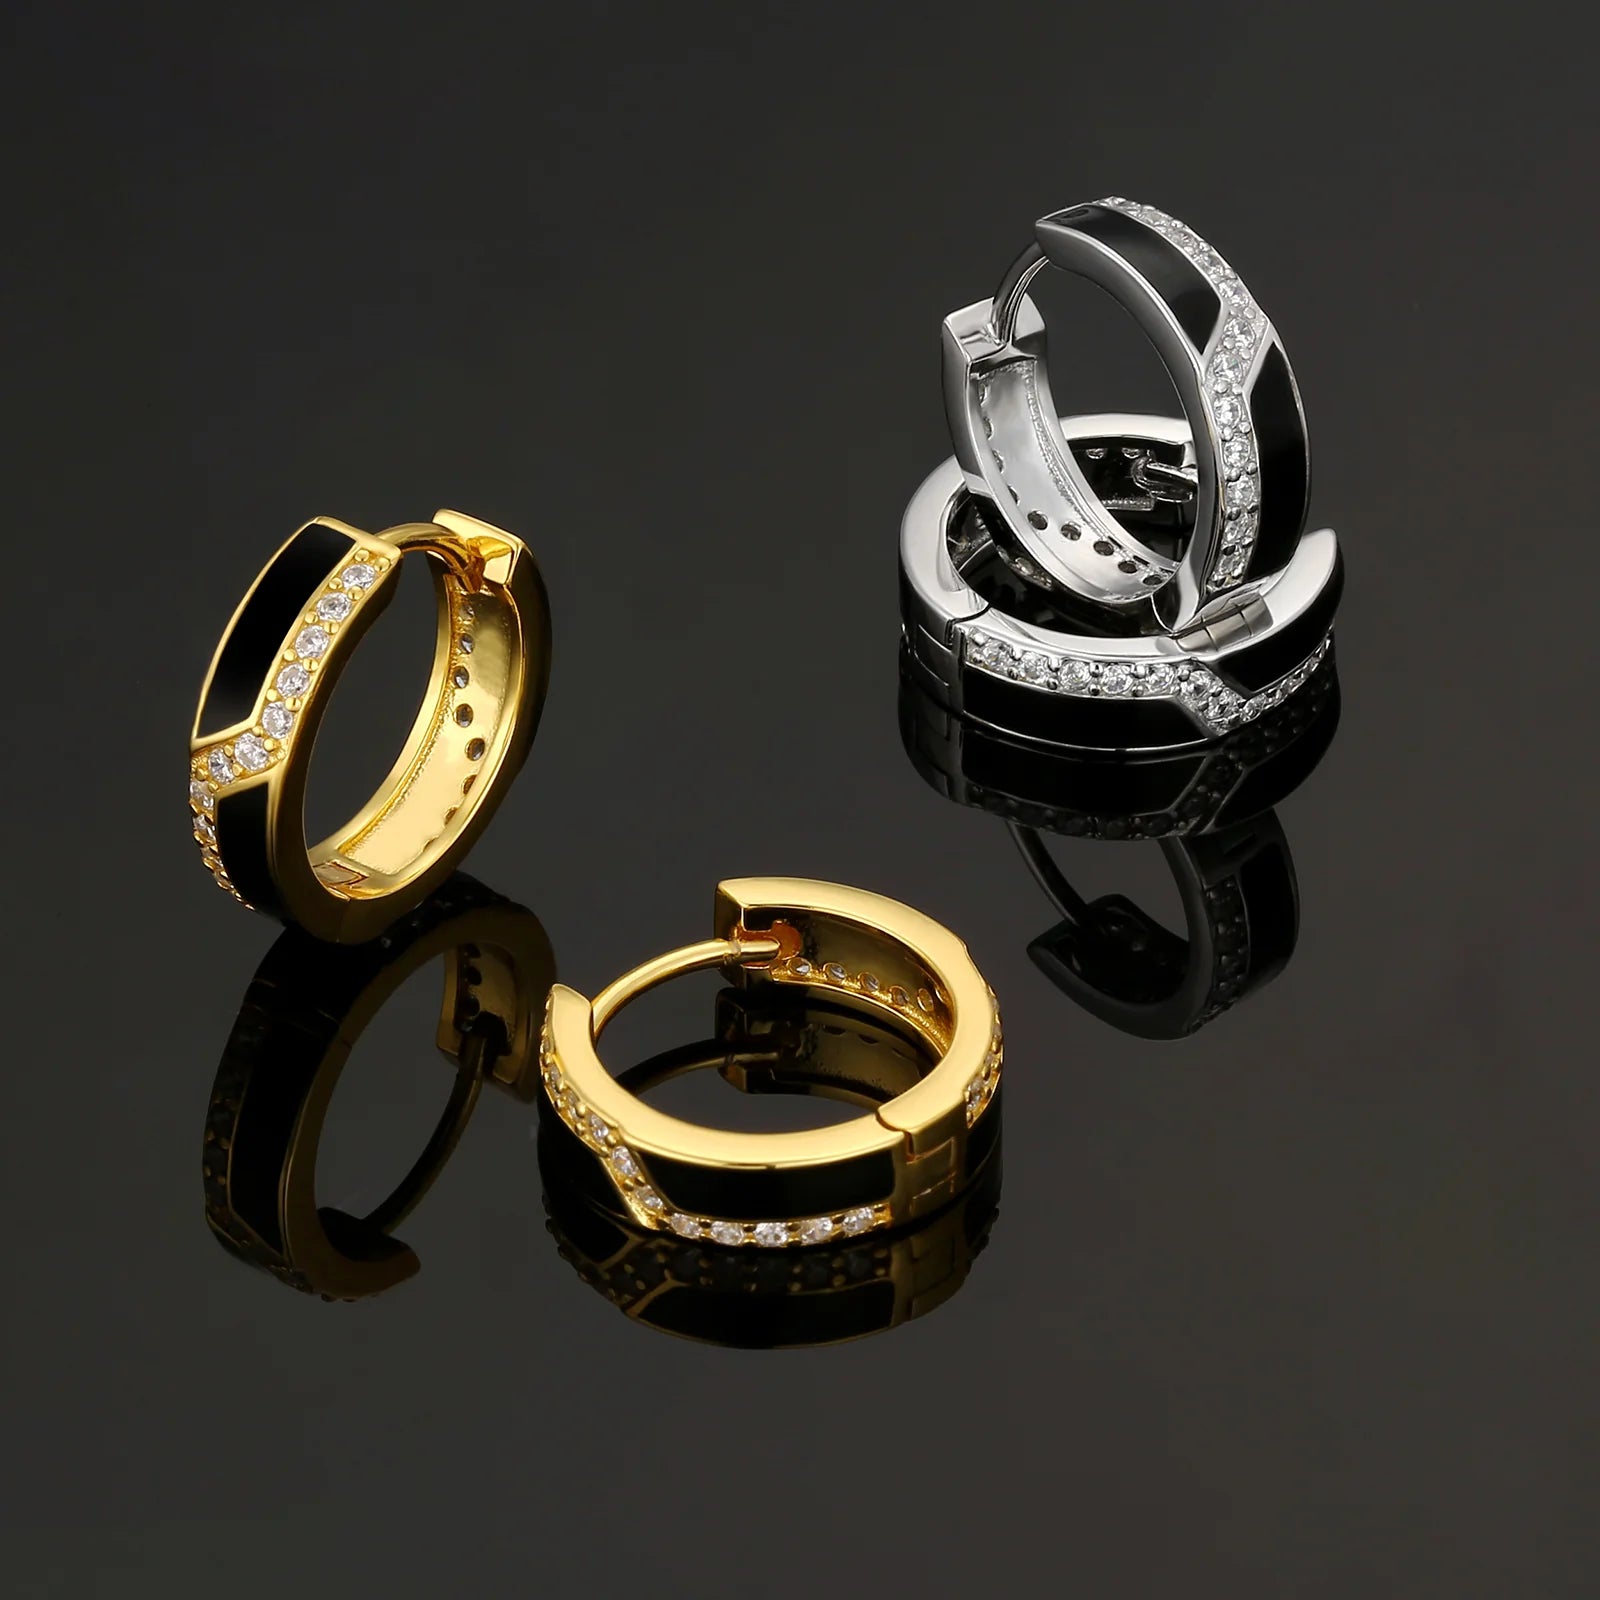 S925 Silver Iced Black Hoop Earrings in White Gold - 15mm Earrings 